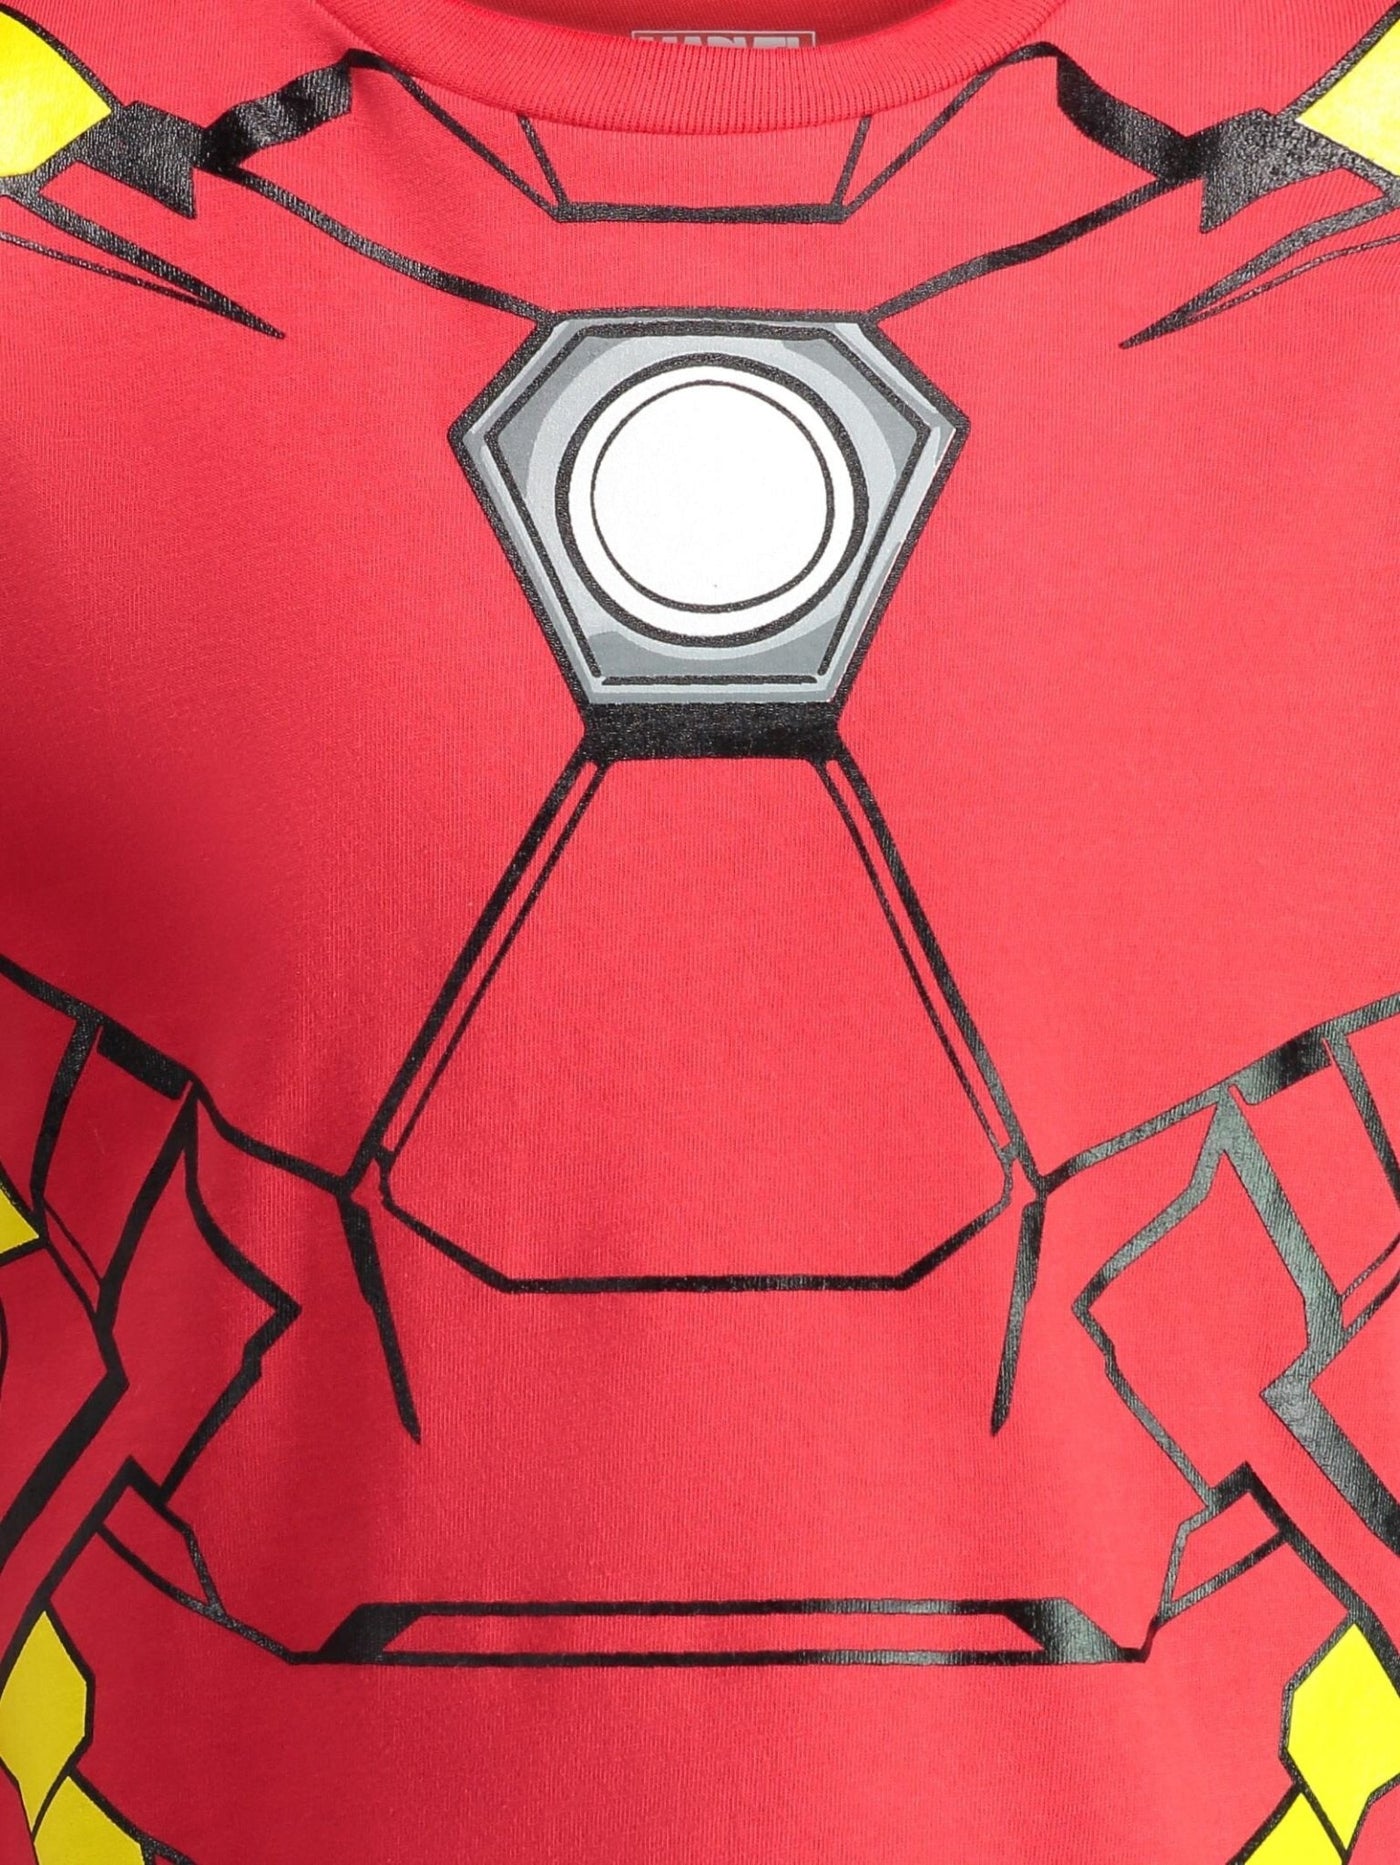 Marvel Avengers 4 Pack Athletic T-Shirts - imagikids